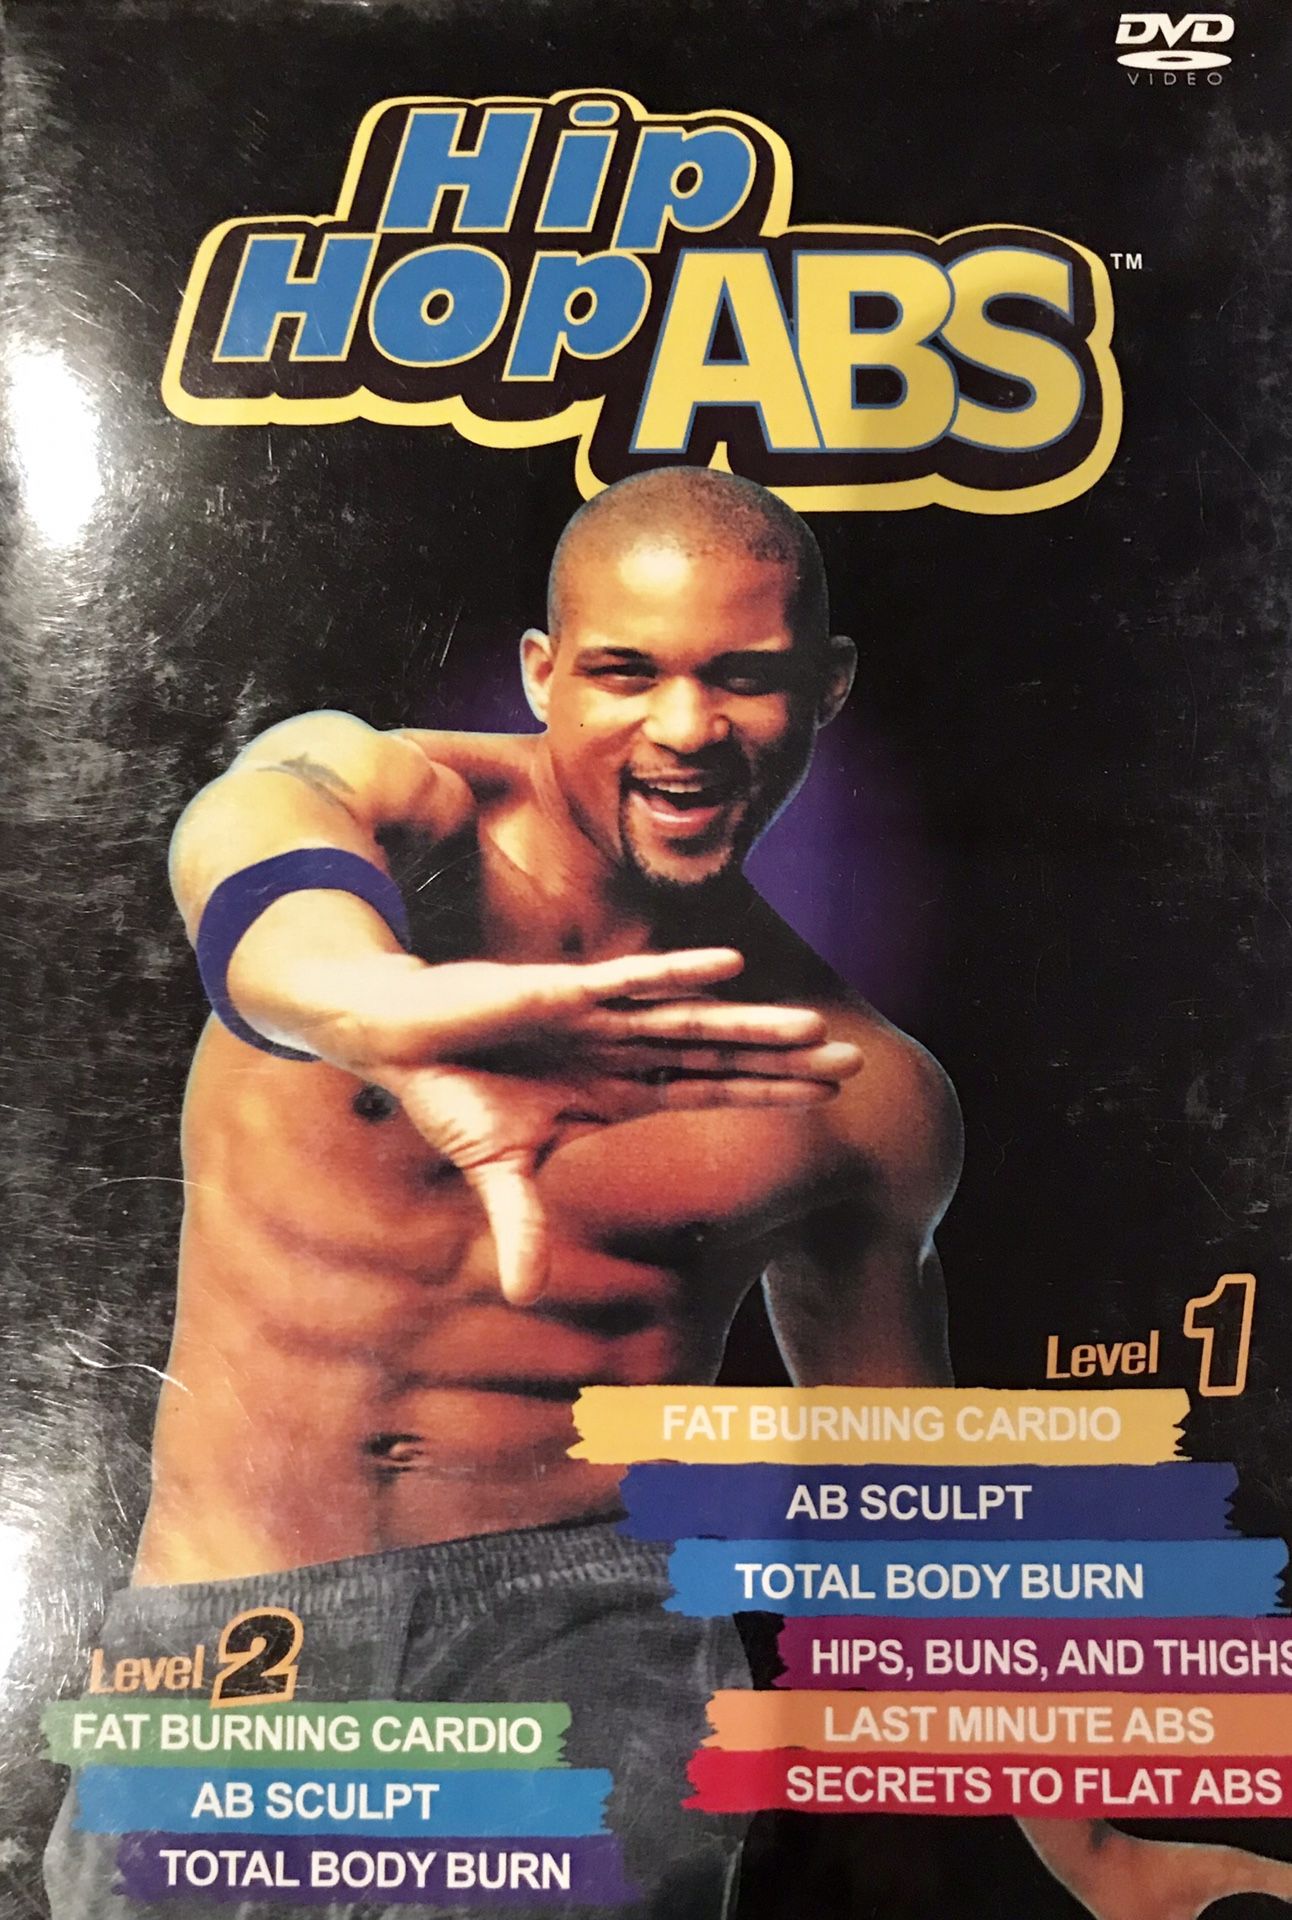 New Shaun T’s Hip Hop Ab Workout DVD set